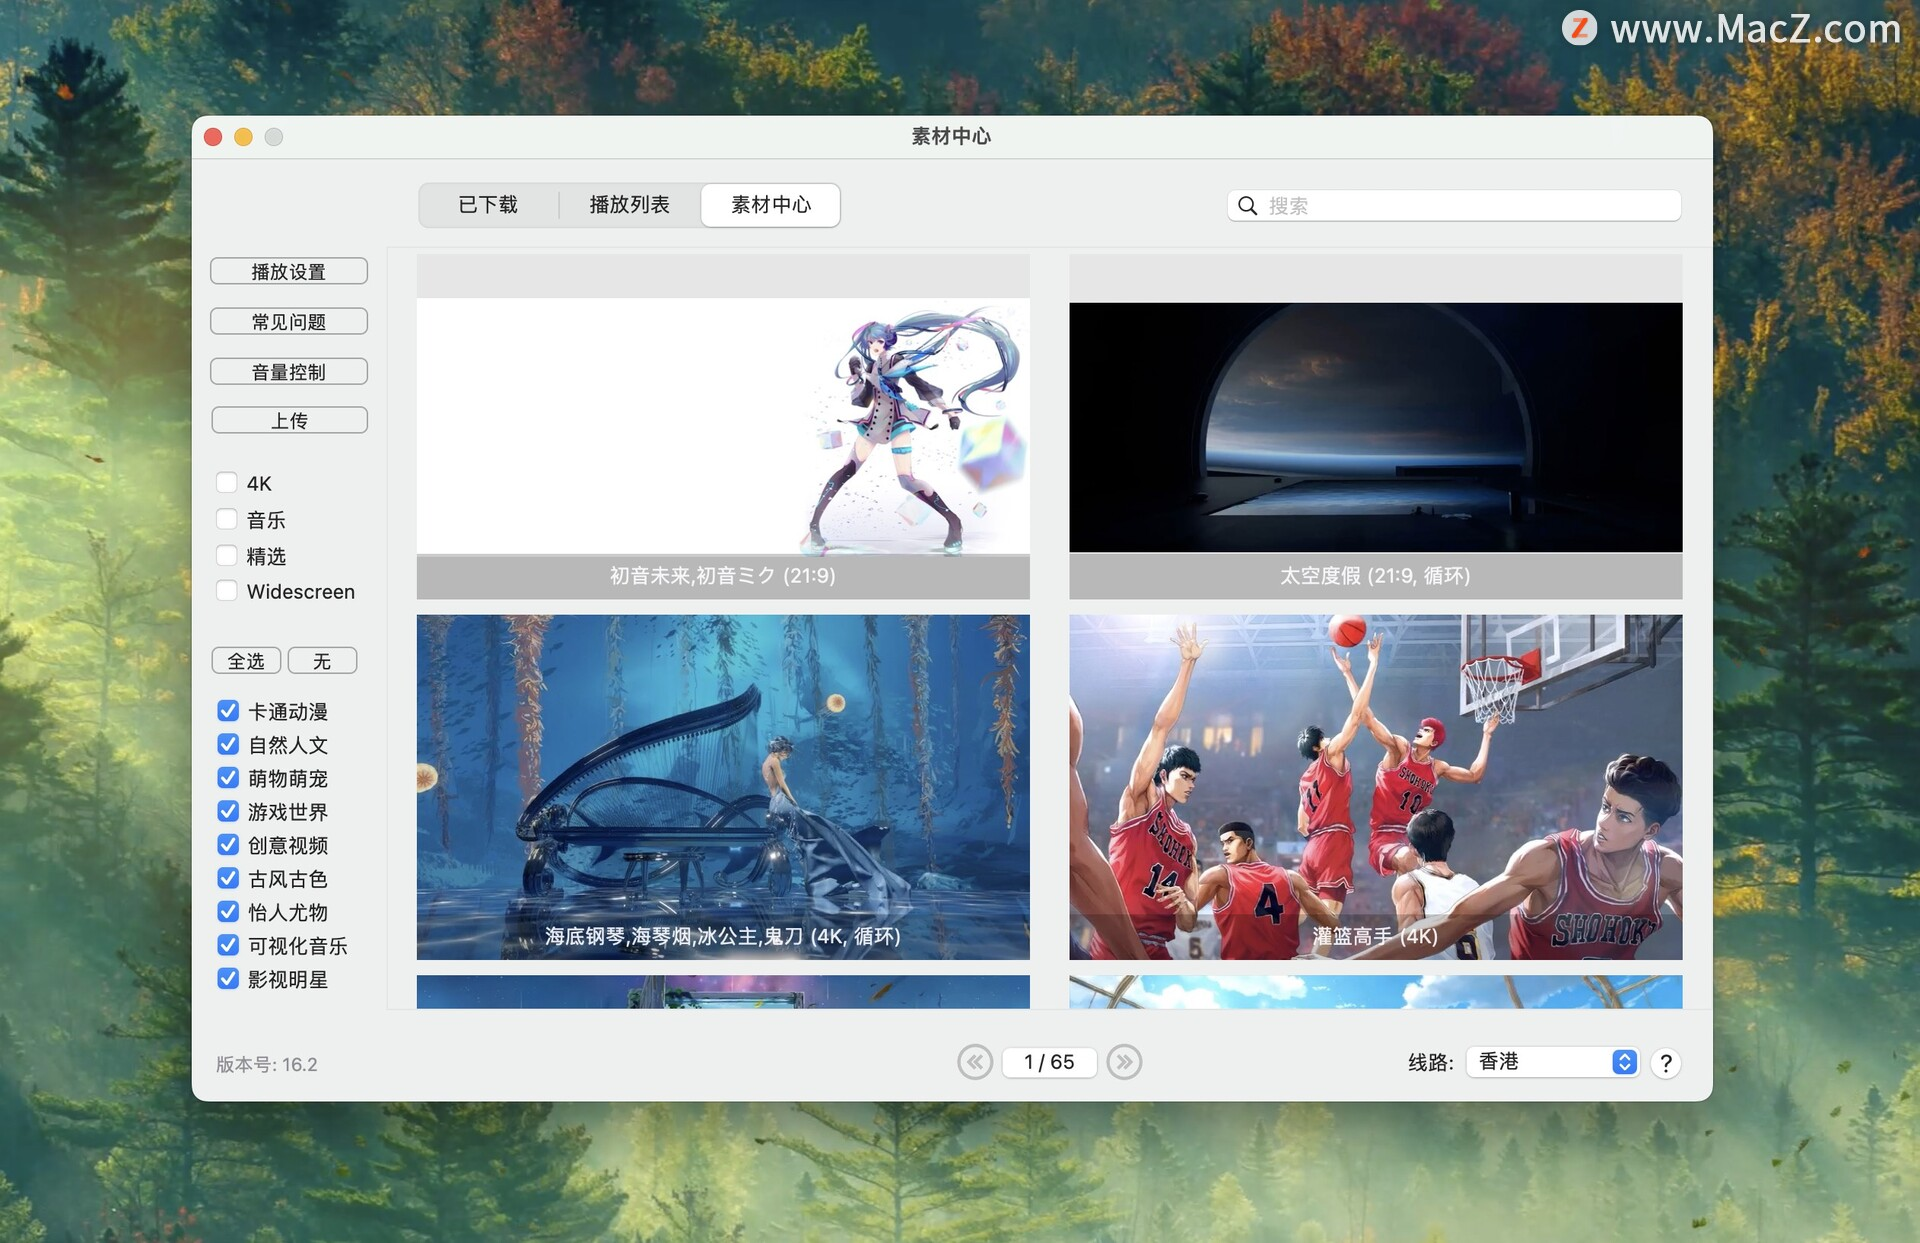 4K视频壁纸推荐：花见Live Wallpaper & Themes 4K Pro